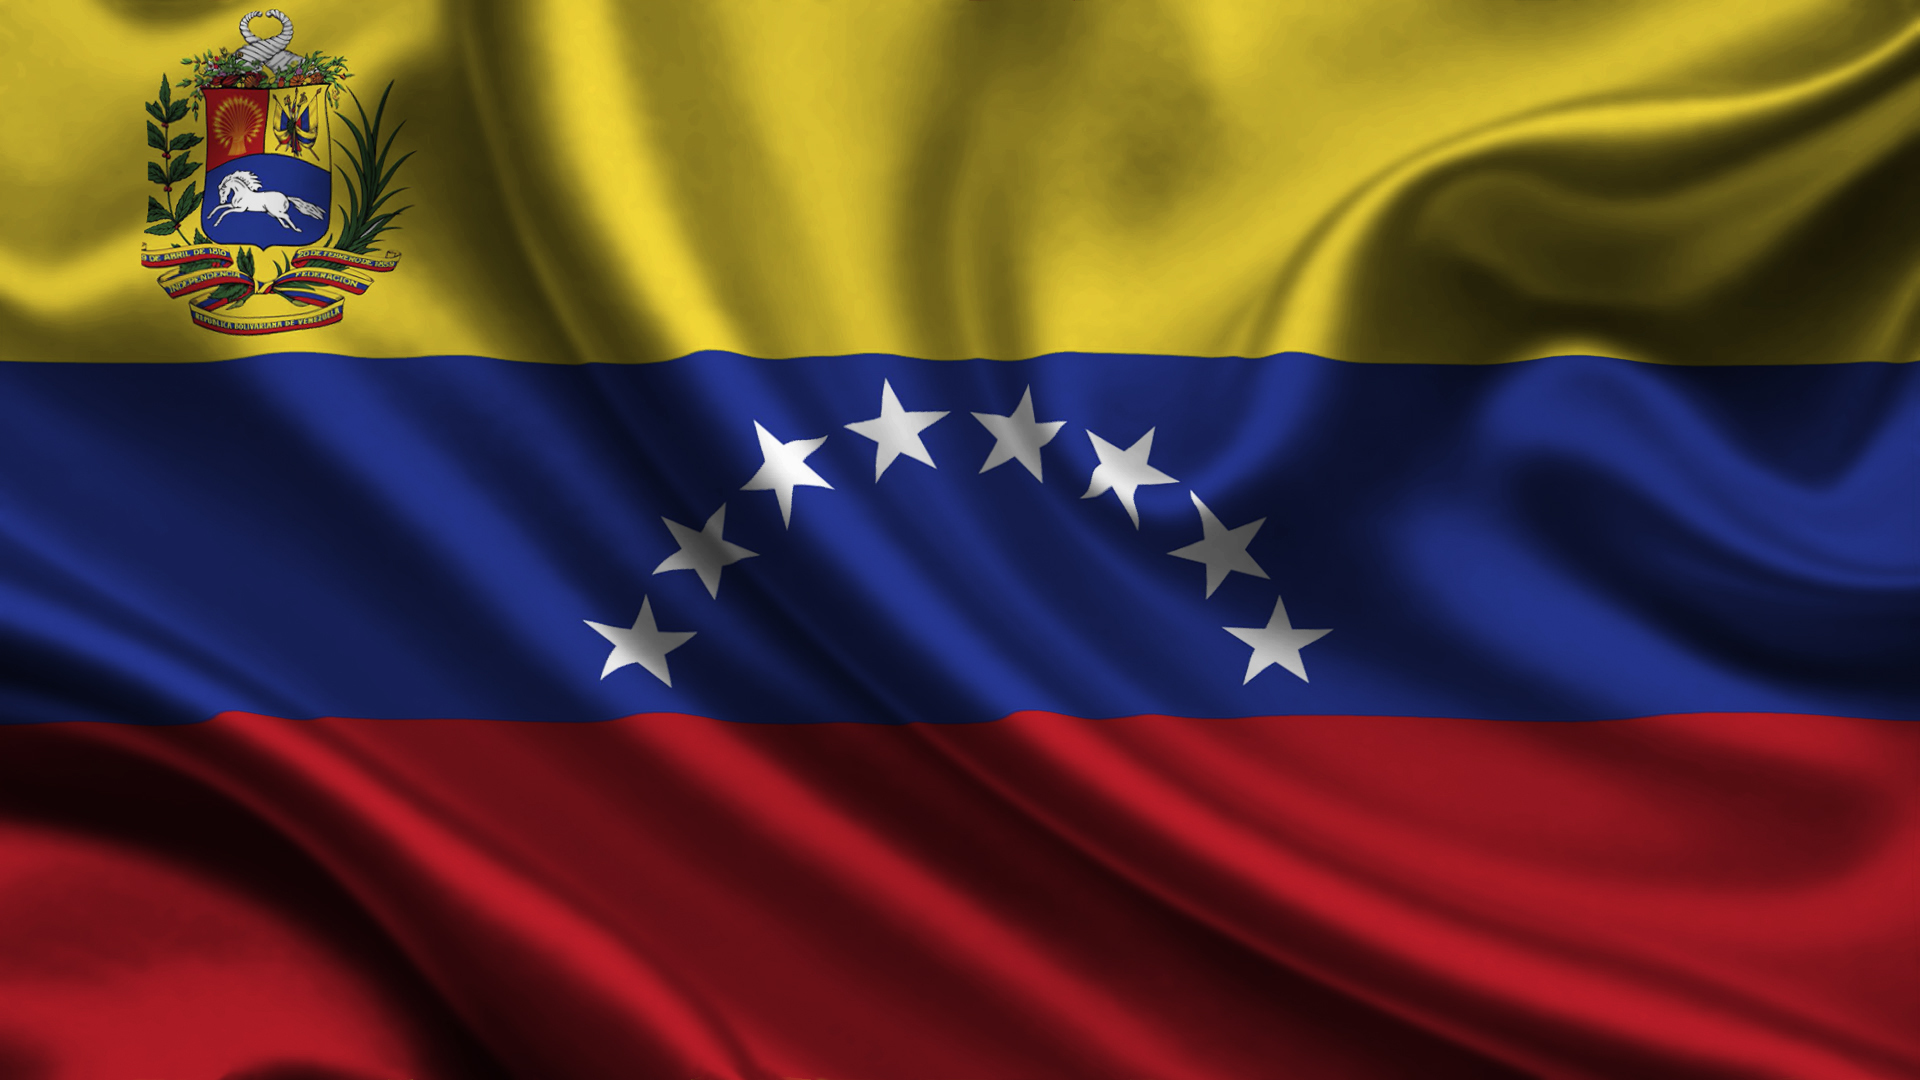 Венесуэла, флаг HD фото картинки, обои рабочий стол